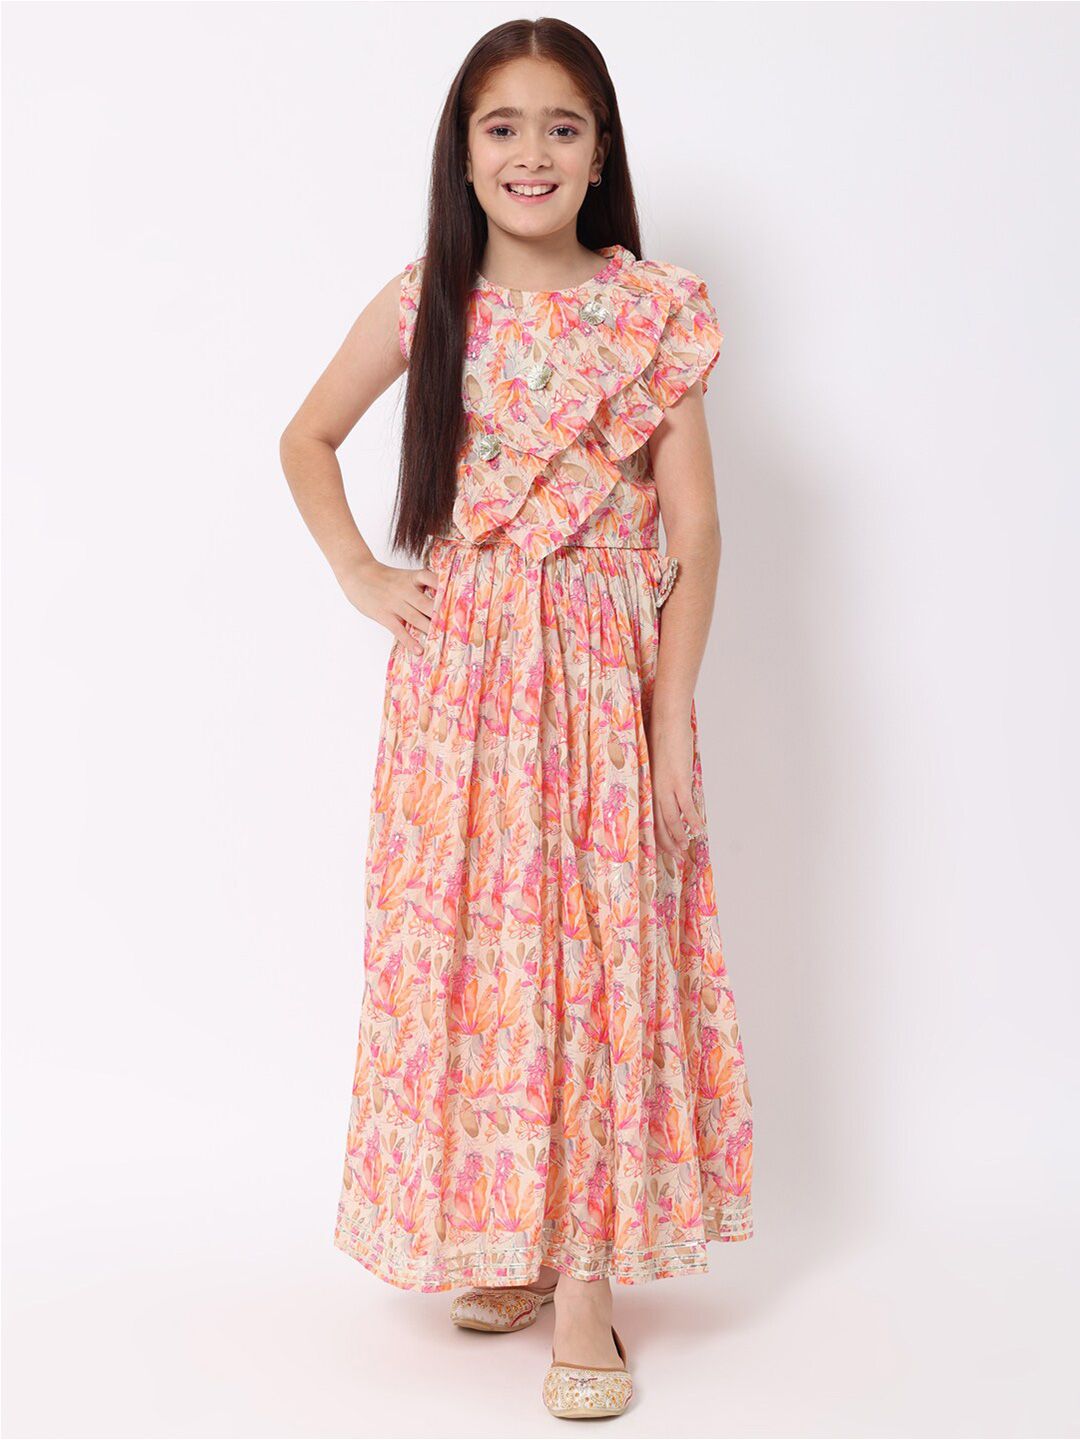 Readiprint Fashions Girls Floral Printed Ready to Wear Lehenga Choli Price in India